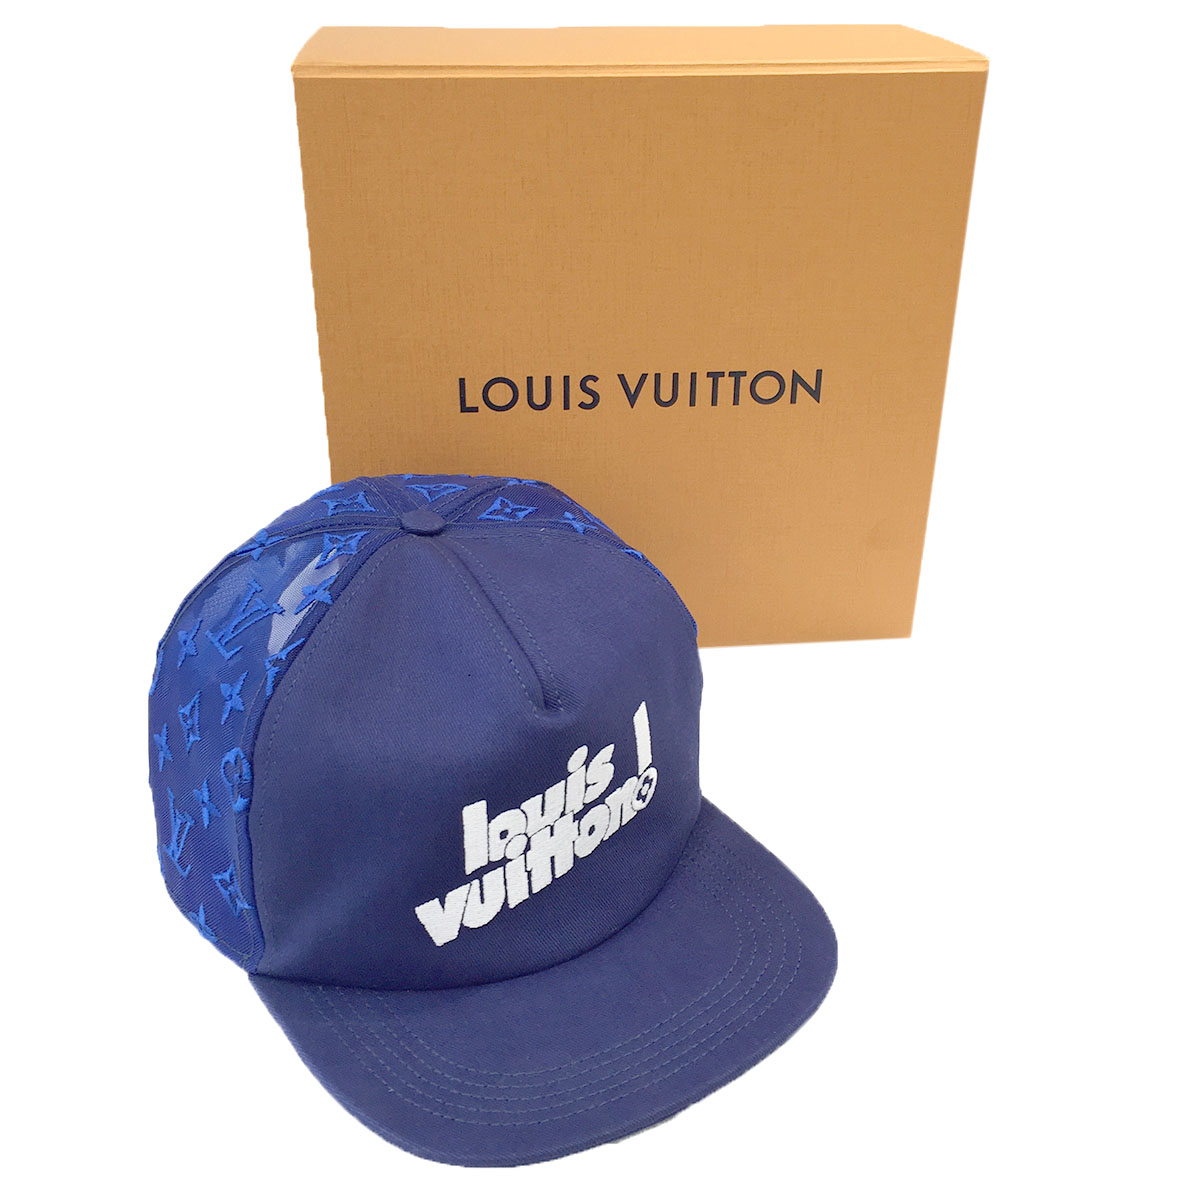 LOUIS VUITTON   メンズ LVメッセージ  メッシュCAP正規品国内正規店で購入致しました